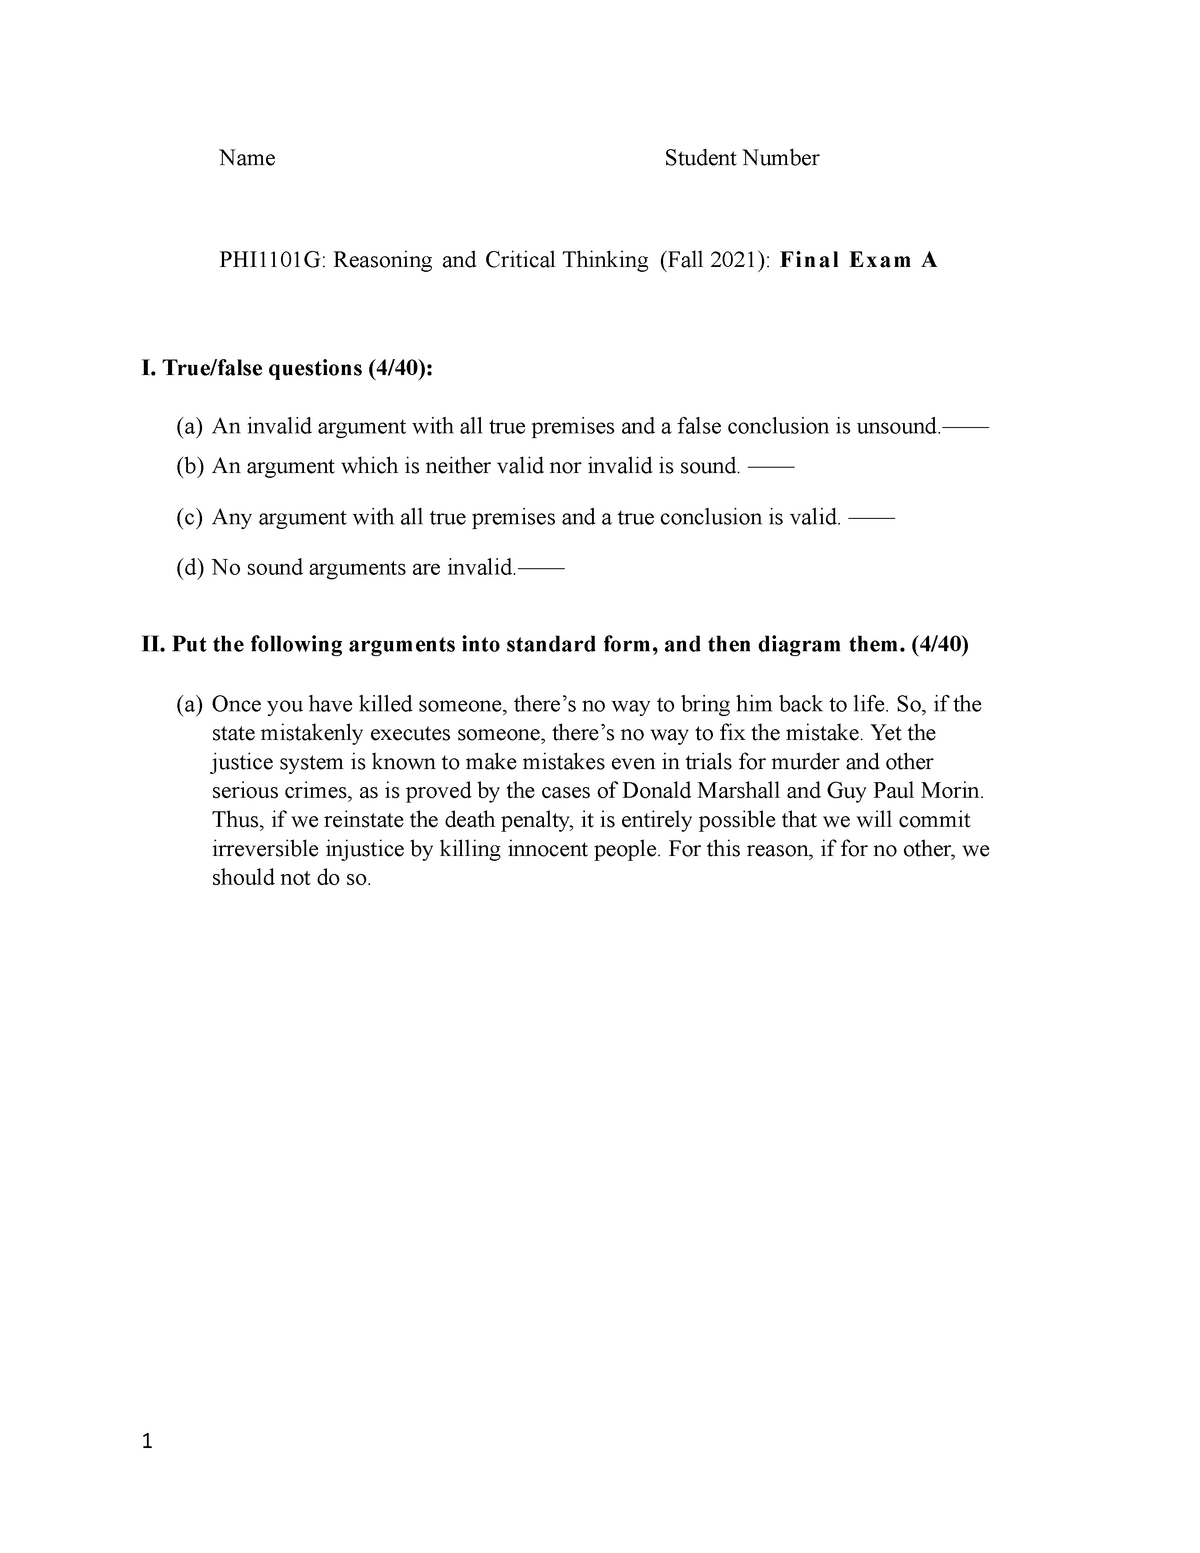 phi1101 reasoning and critical thinking